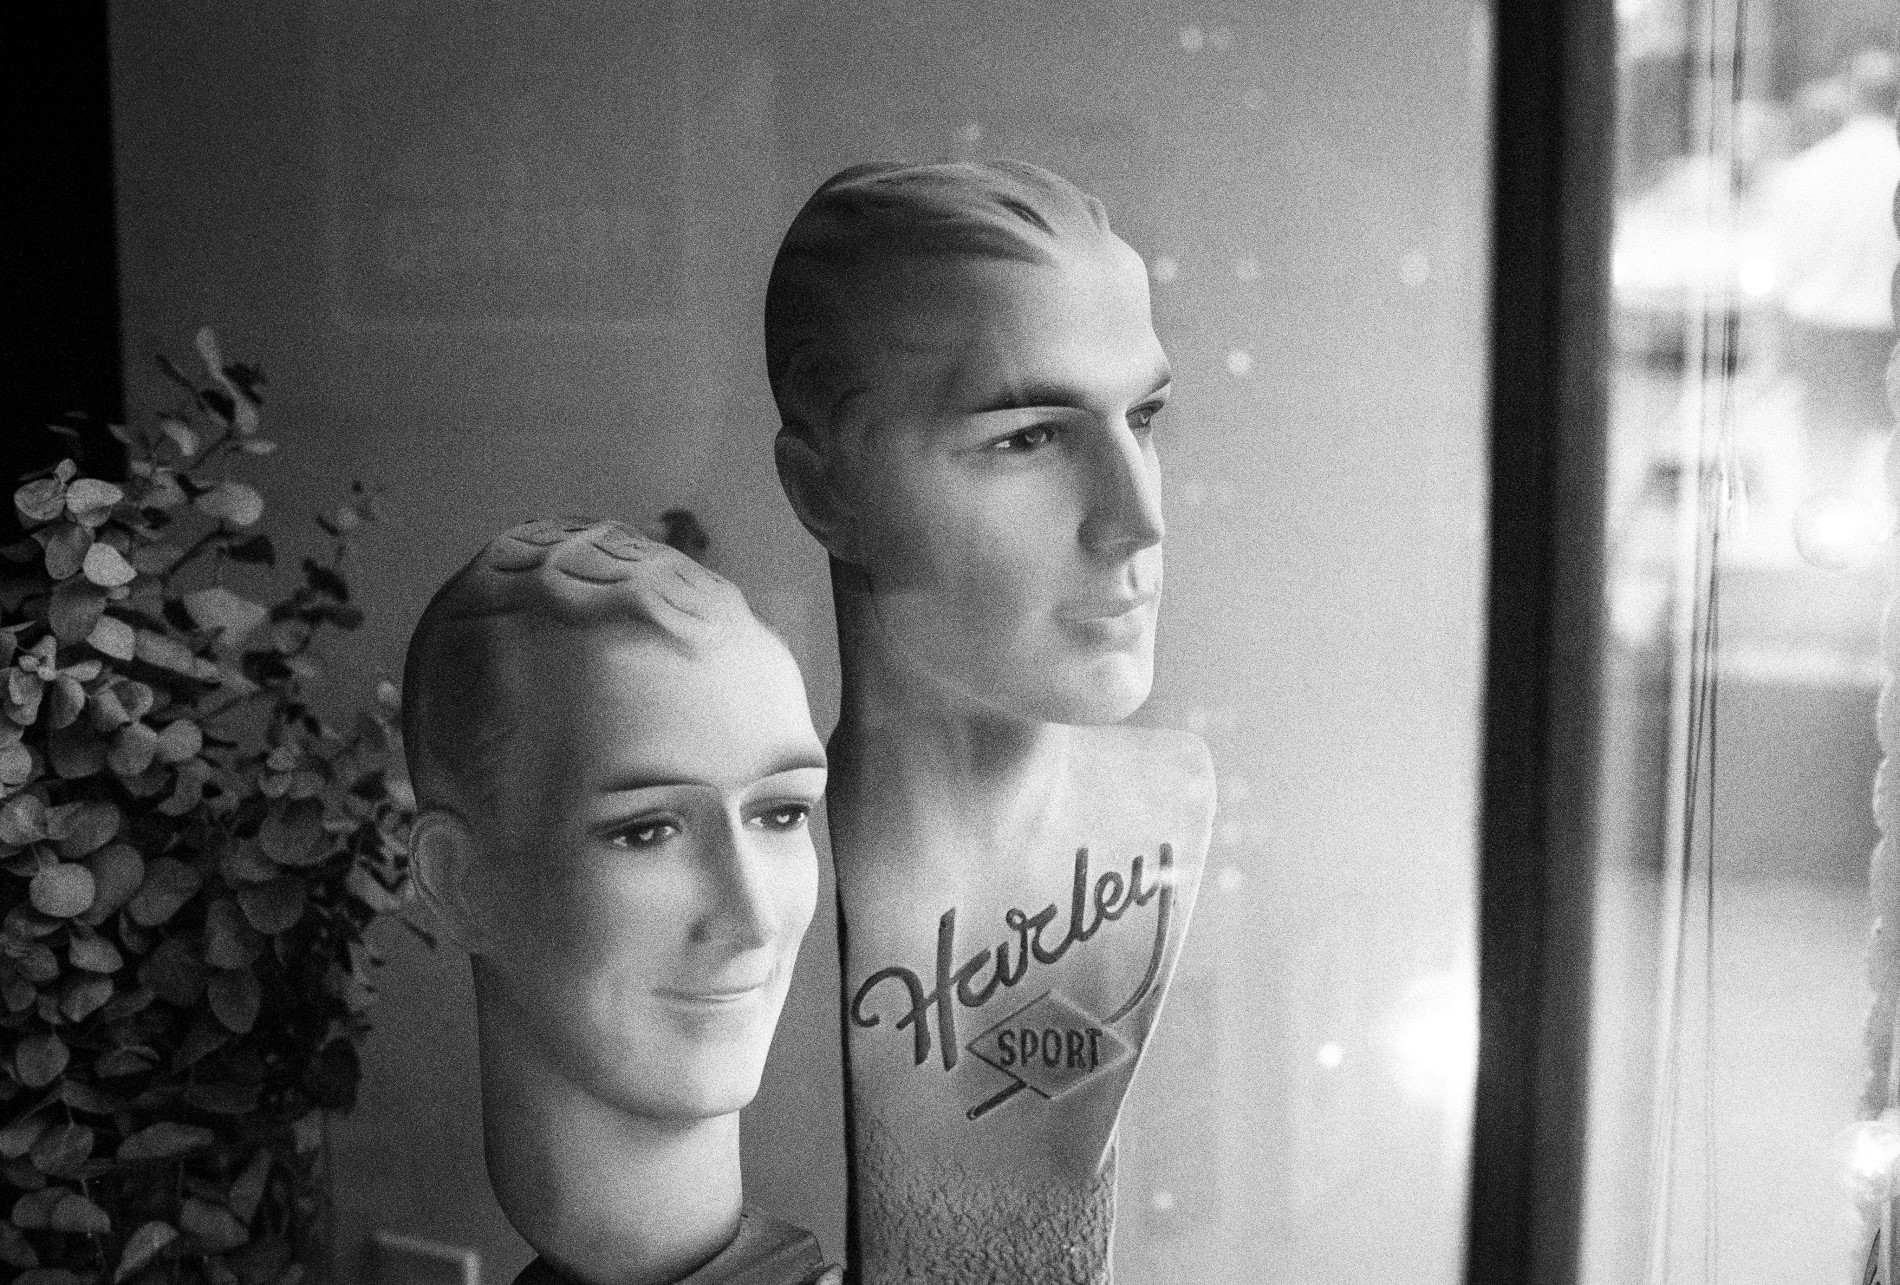 Two male mannequin heads in window